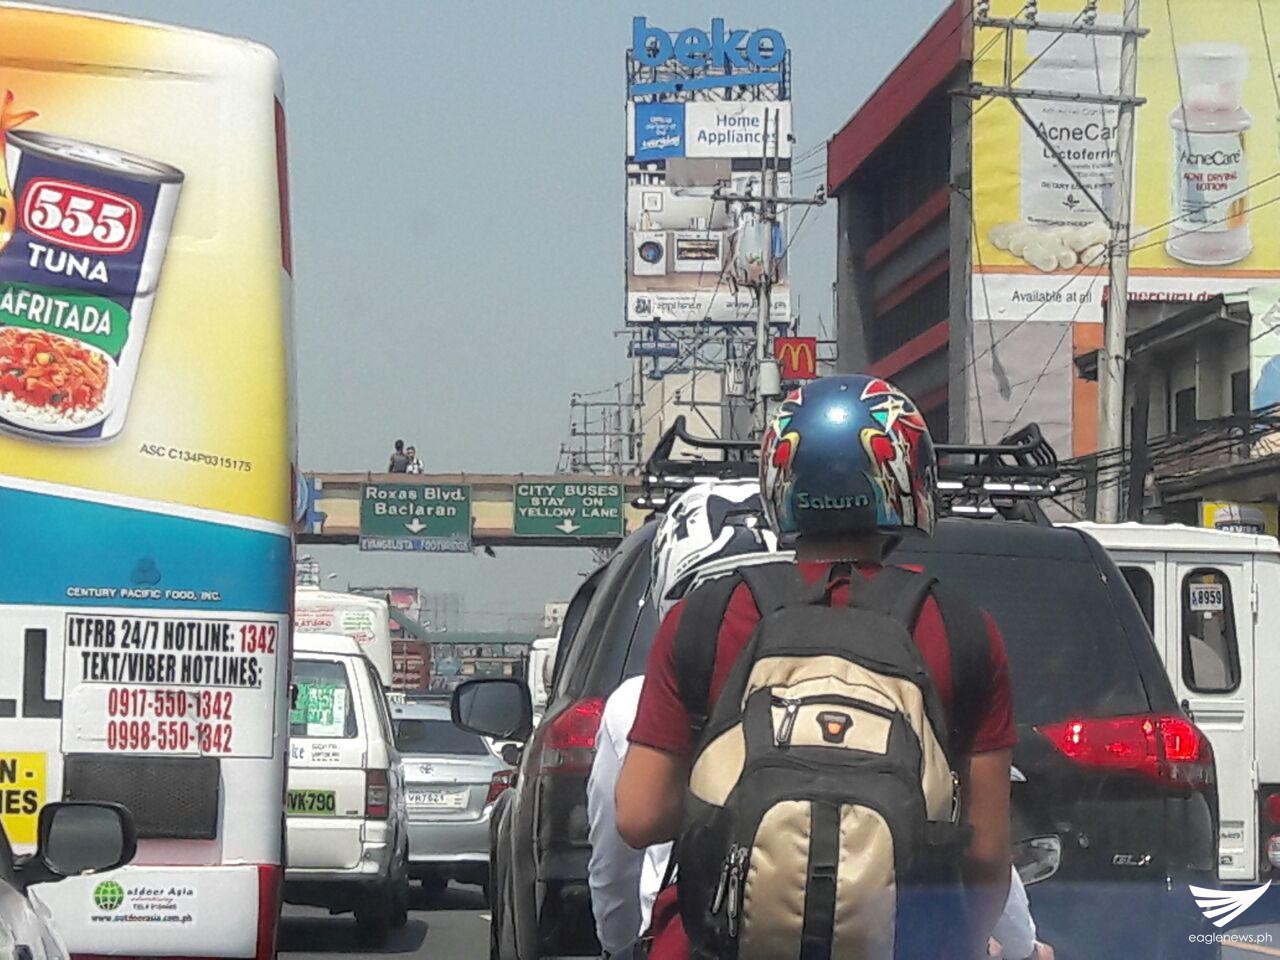 Road situation in Metro Manila (Edsa taft 2)